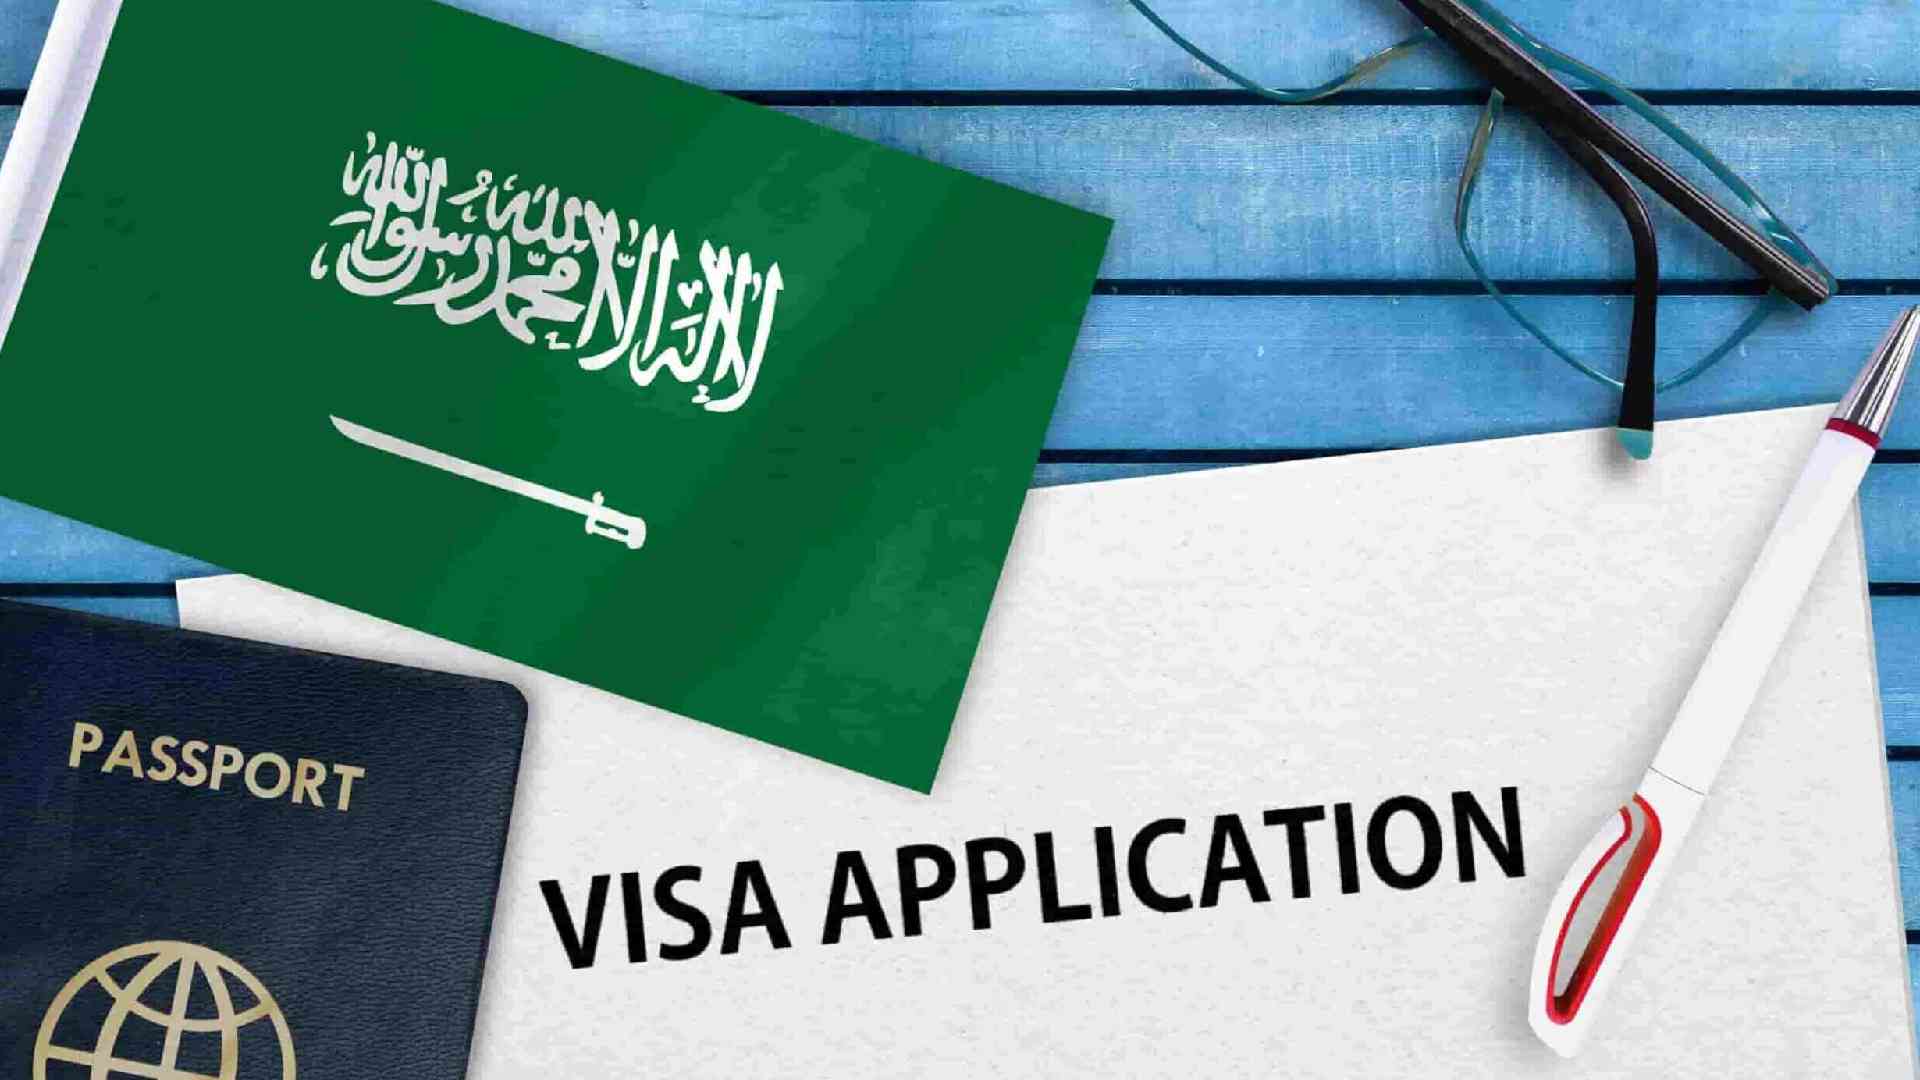 Benefits of Saudi Business Visa